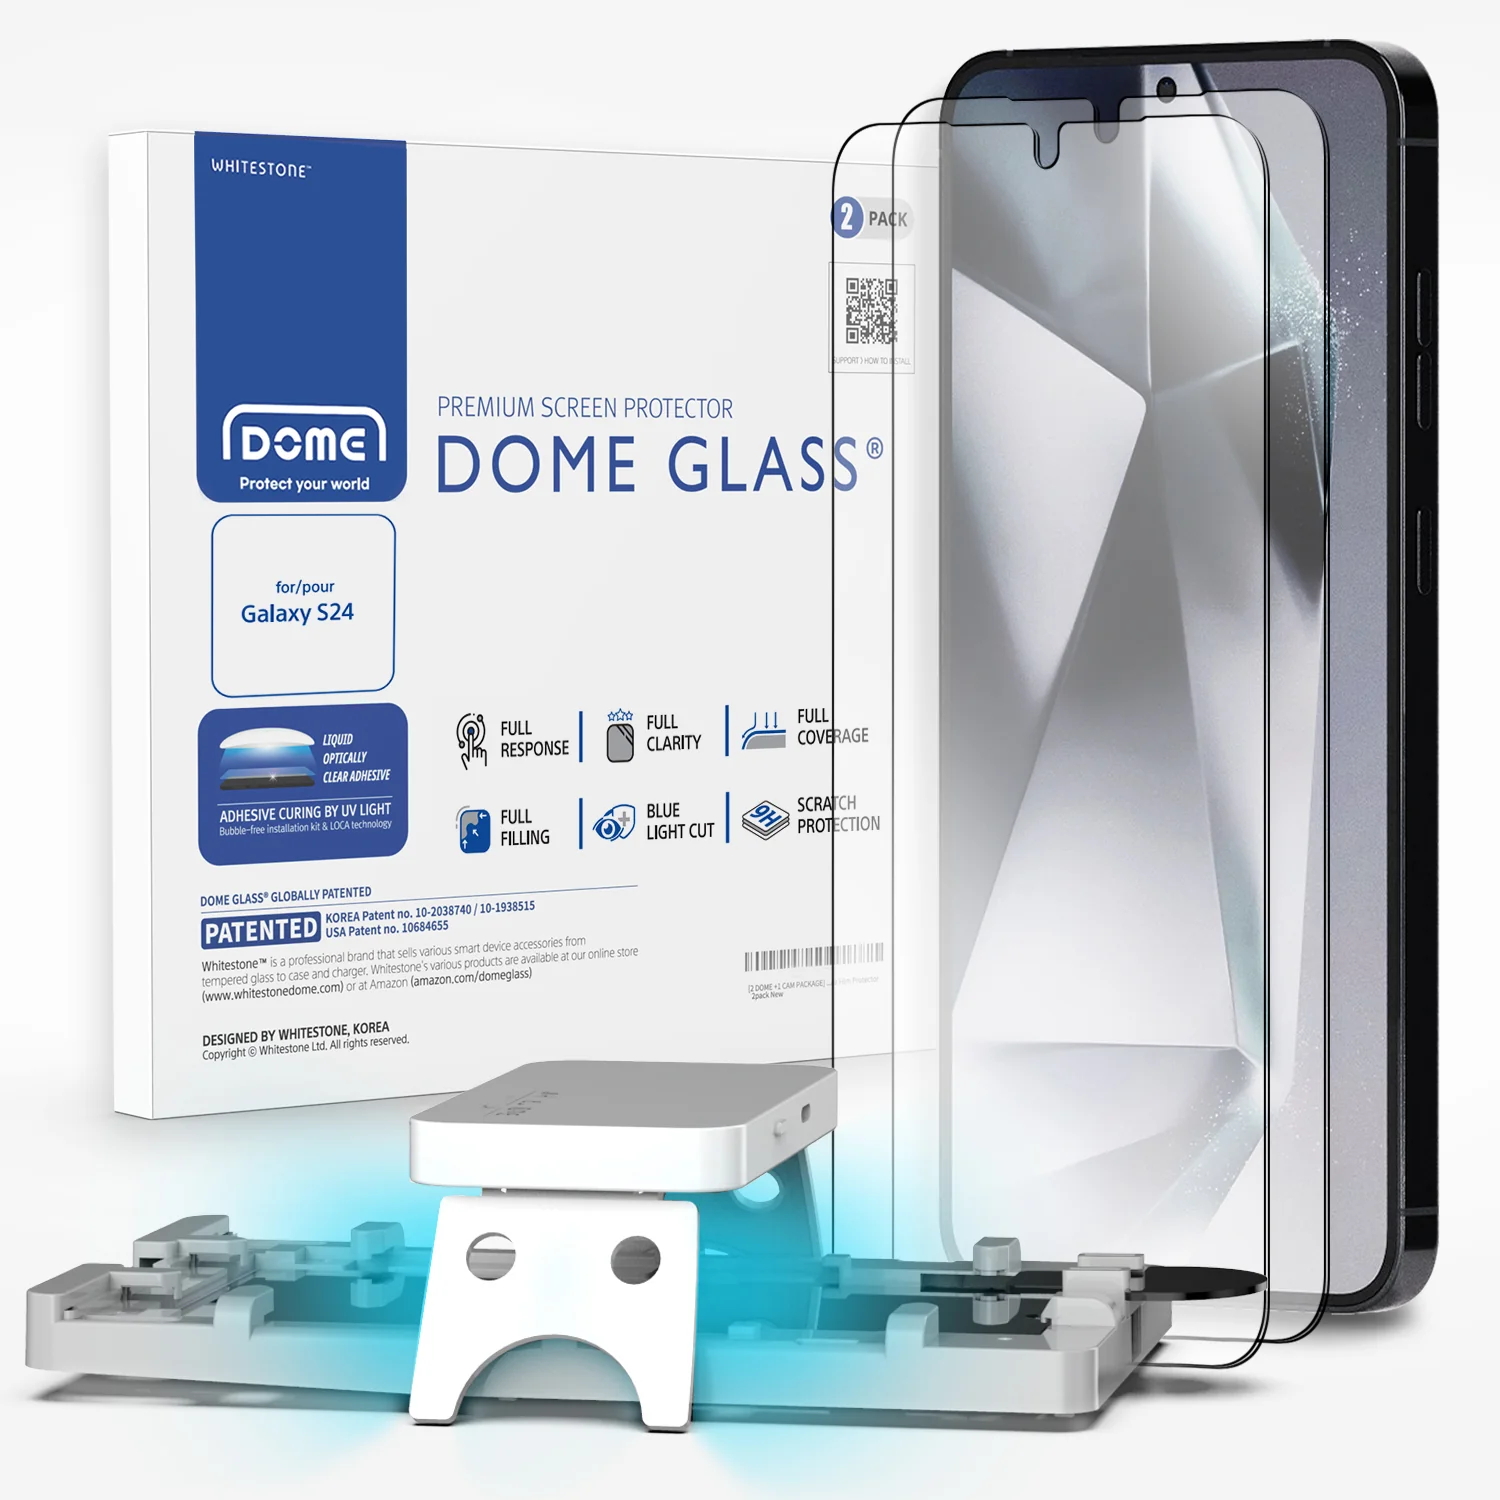 Whitestone Dome Glass Screen Protector for the Samsung galaxy S24